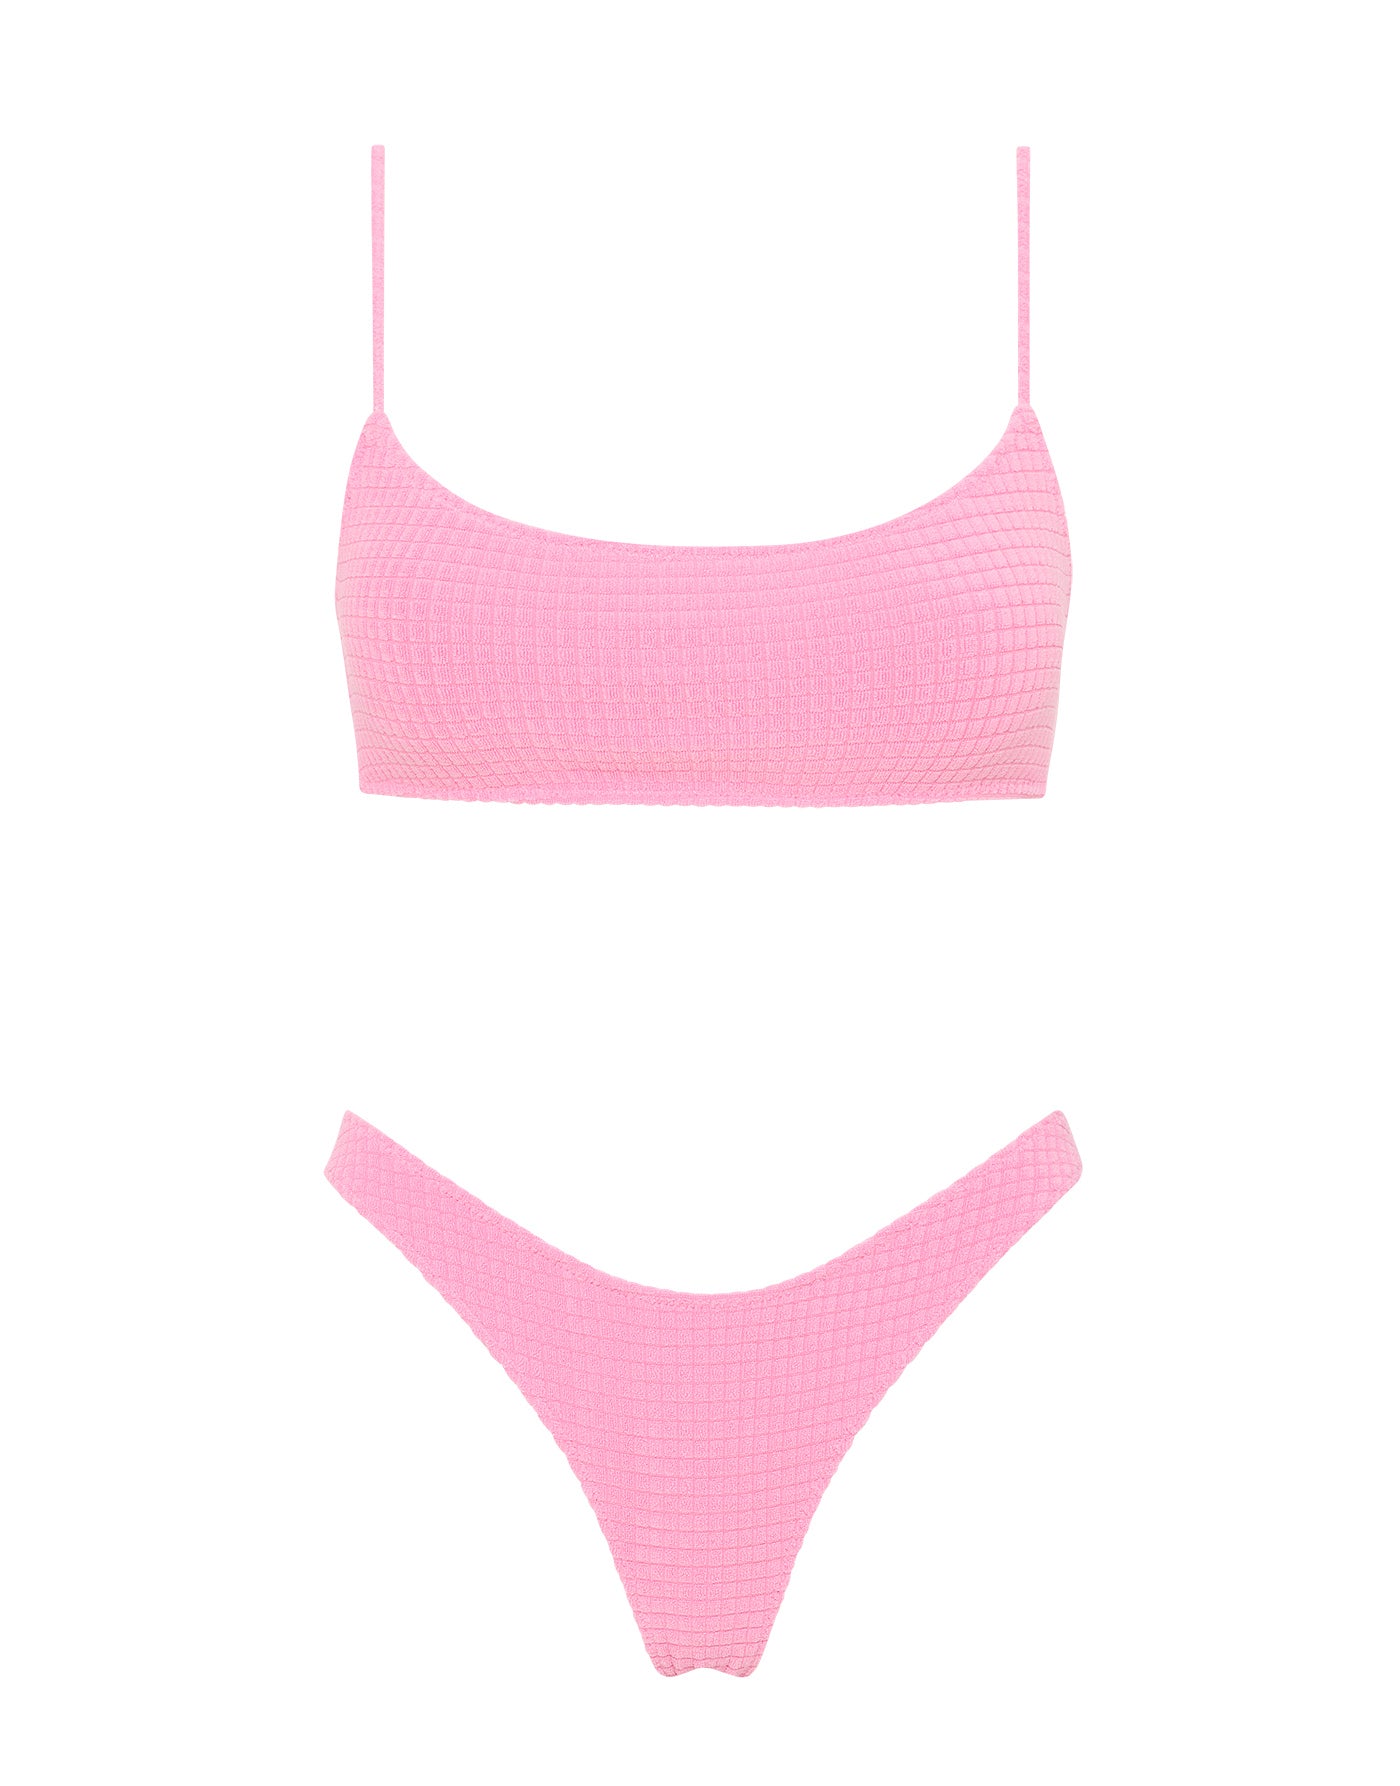 Brand New Triangl Mica Manca Bathing Suit Set Size XS!